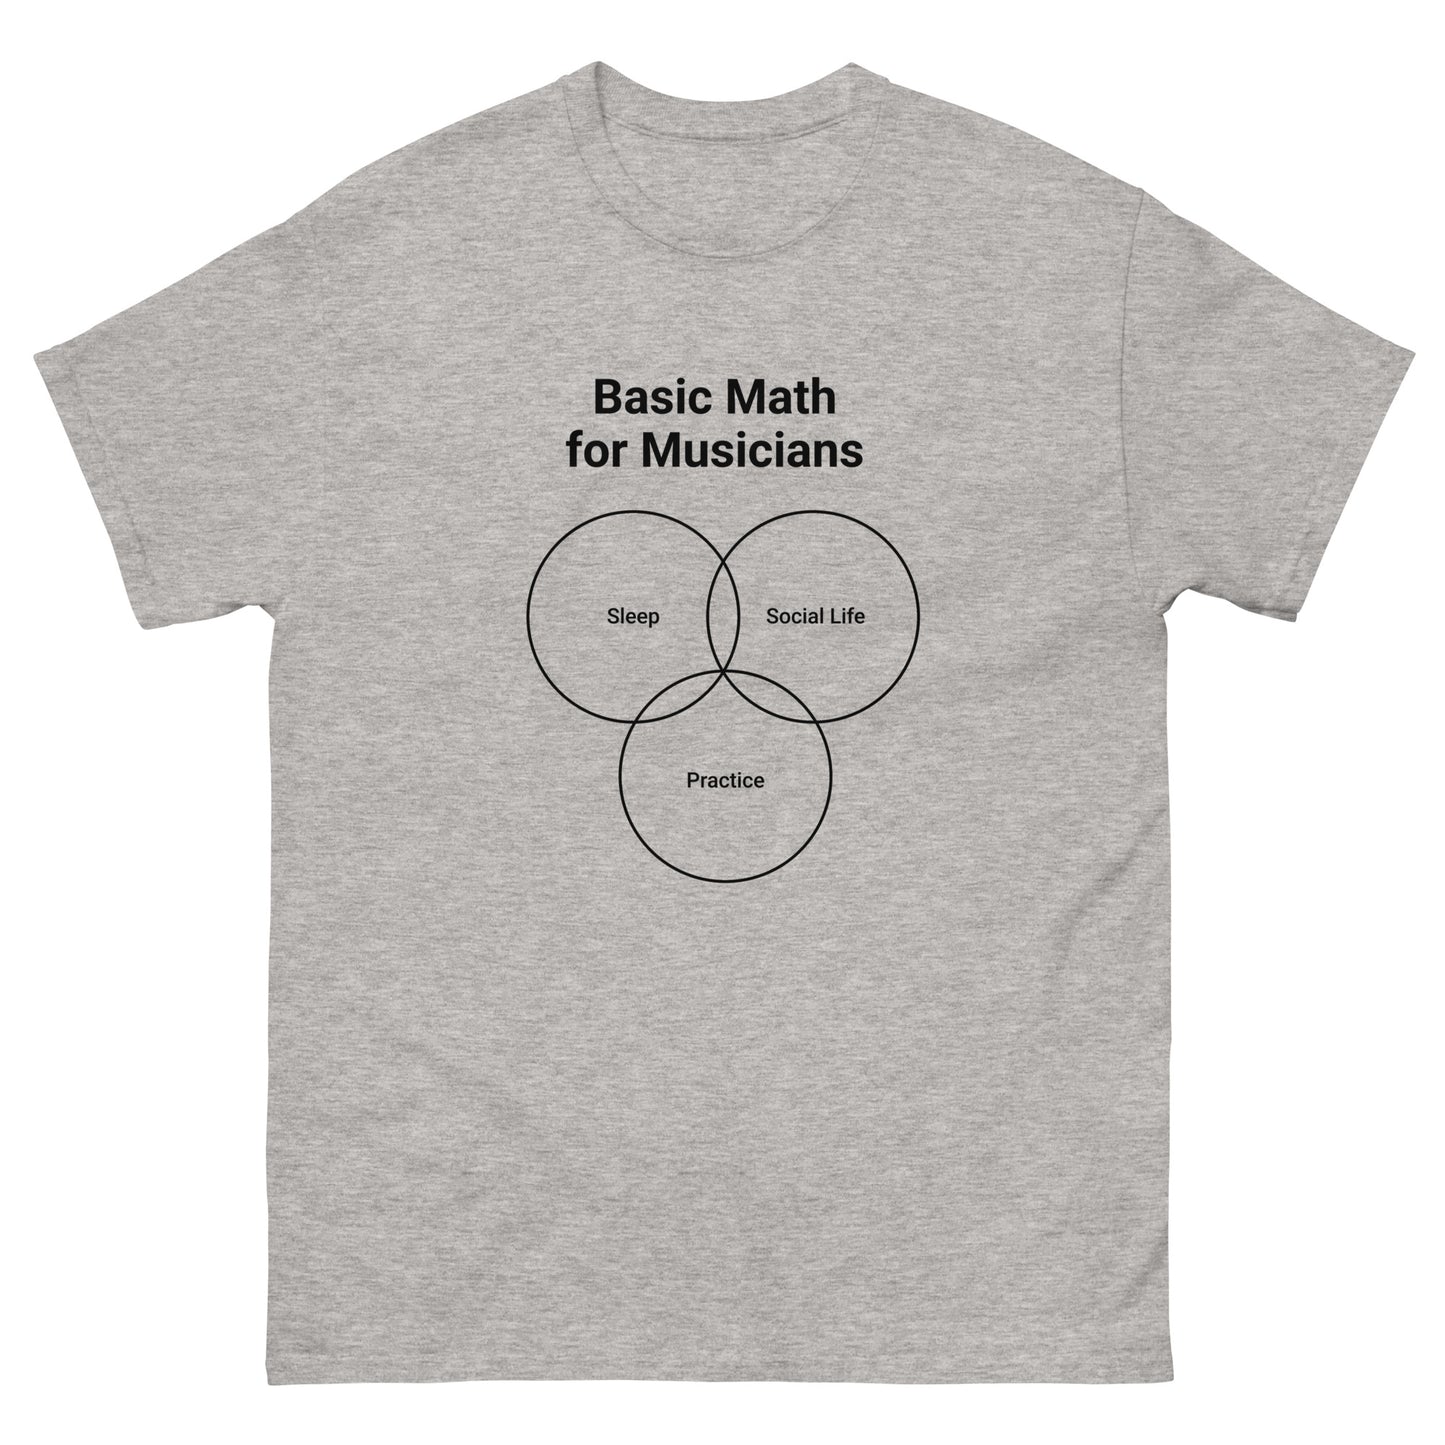 Basic Math for Musicians